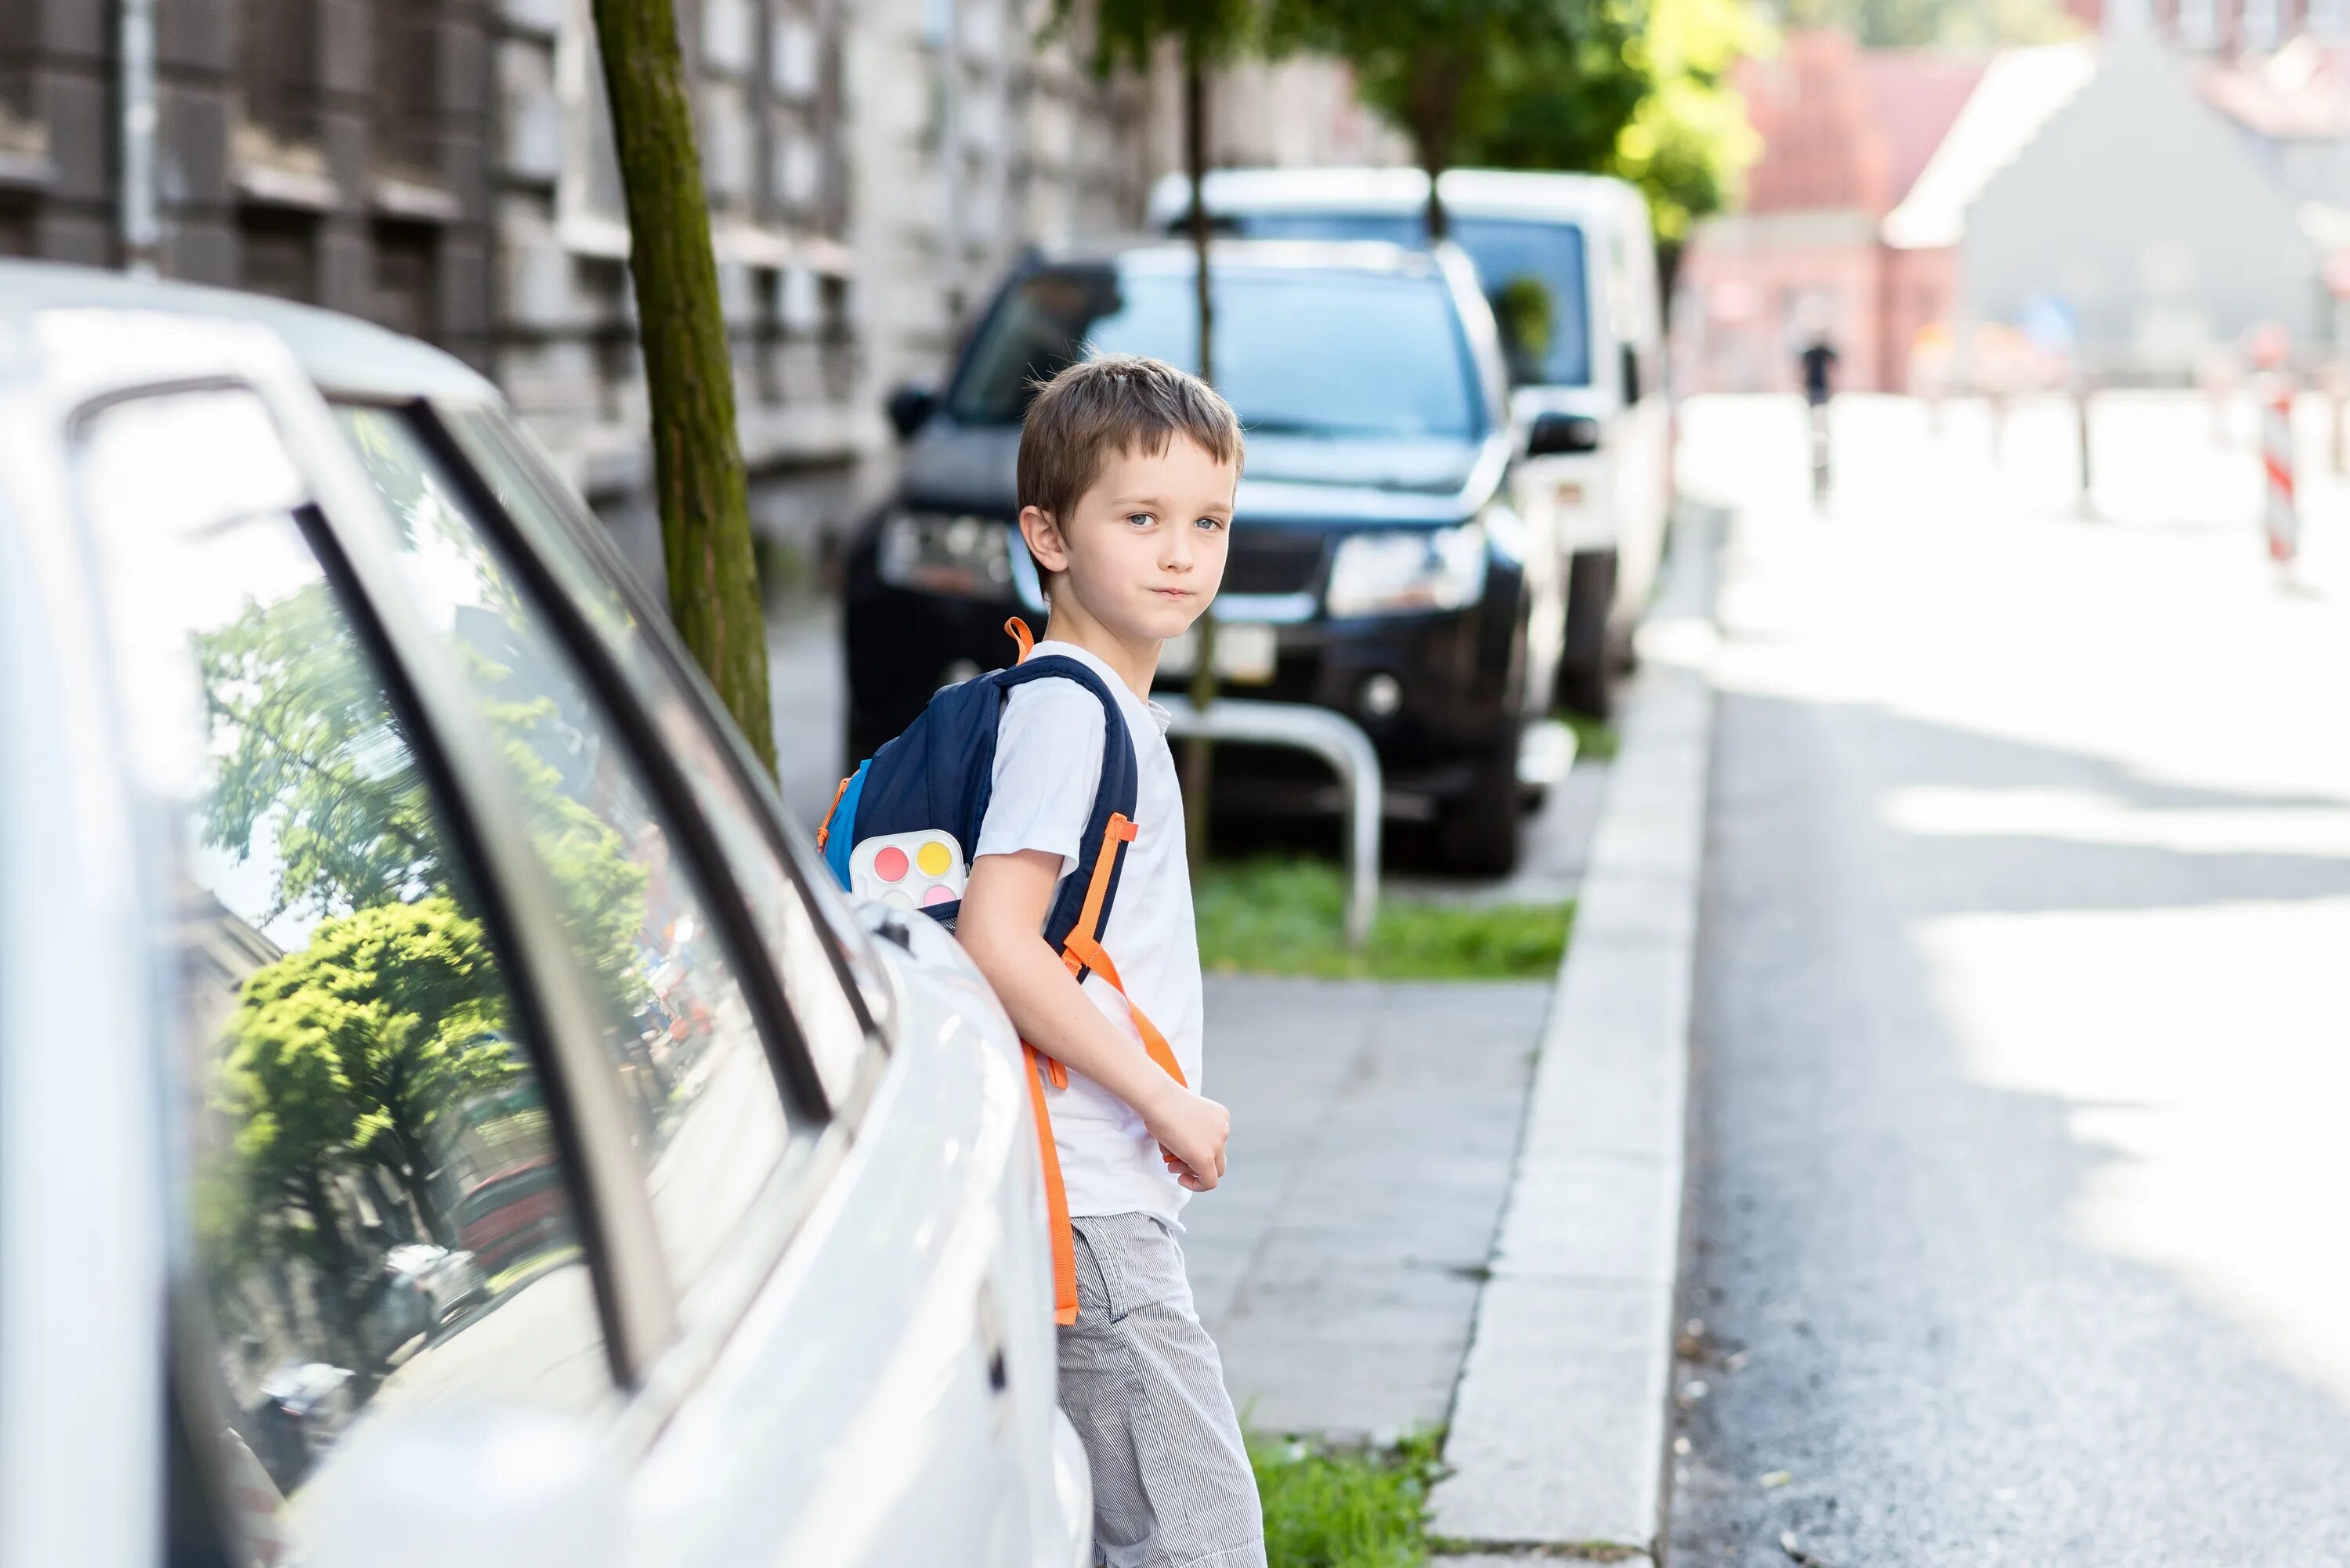 He will go to school. Детский травматизм. Road to School. Ученики на пешеходной картинки. Go to School by car.